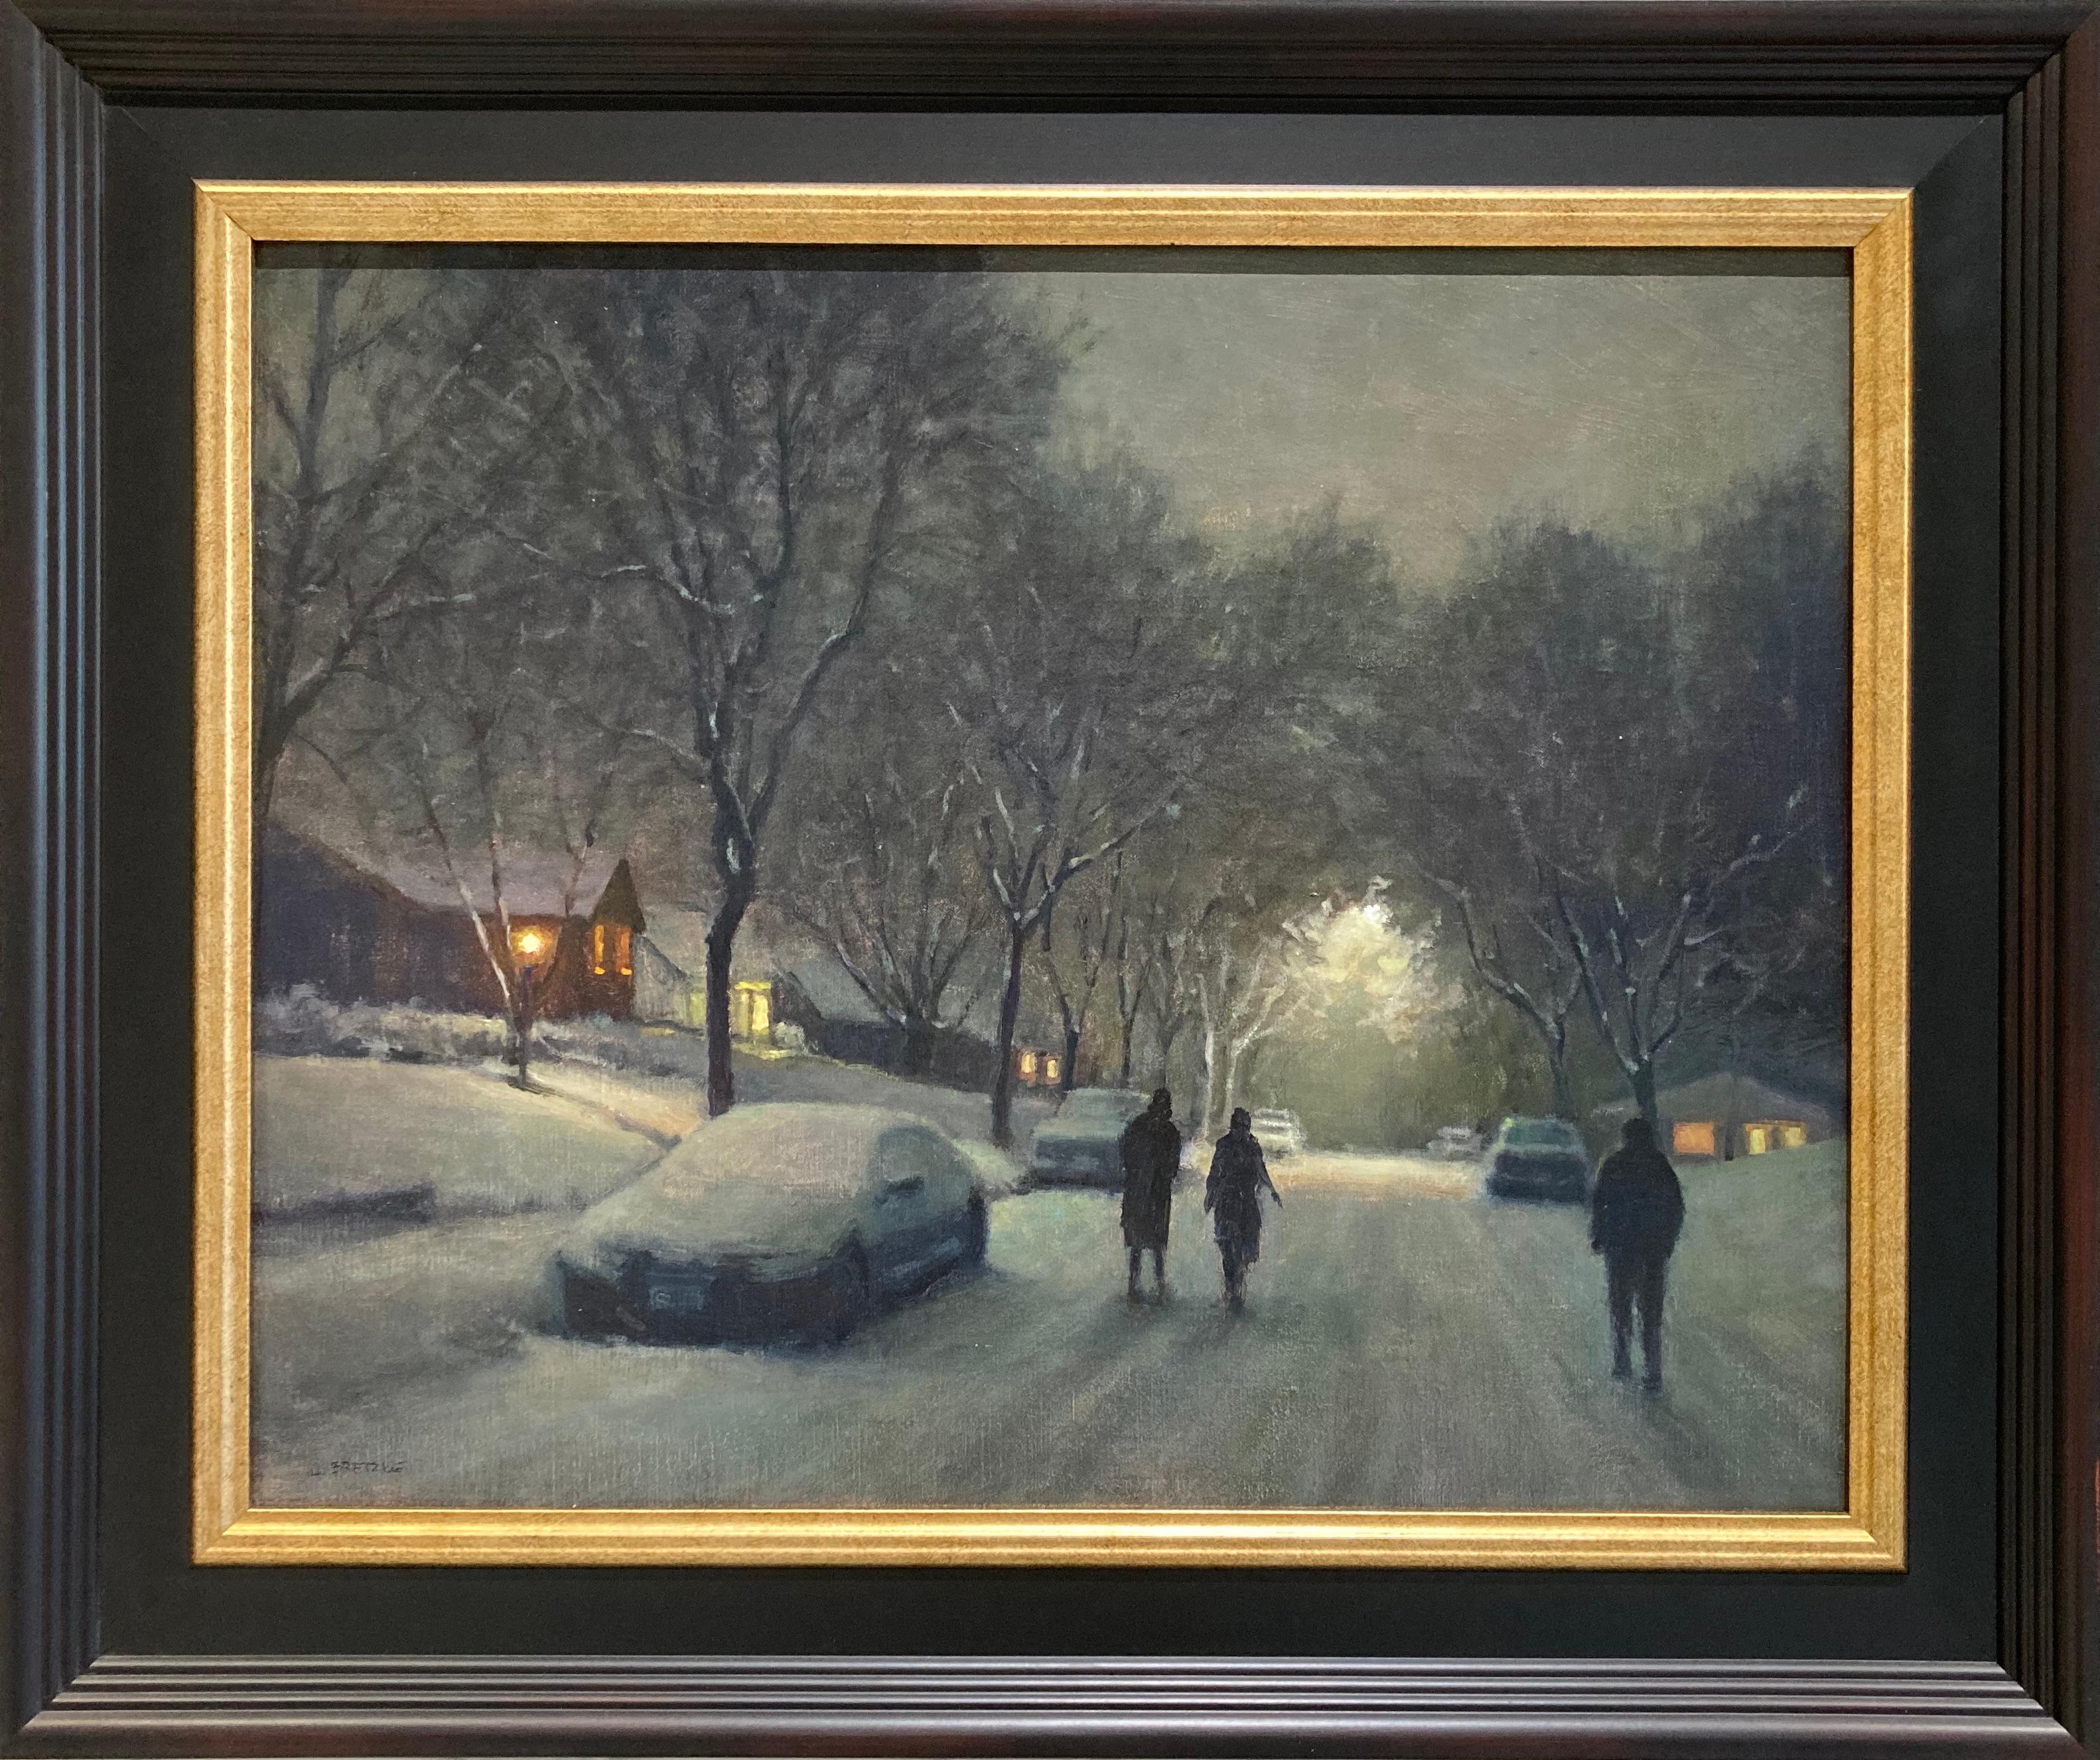 Carl Bretzke Landscape Painting - Unshoveled Sidewalks - Snowy American Realist oil painting of suburbia 